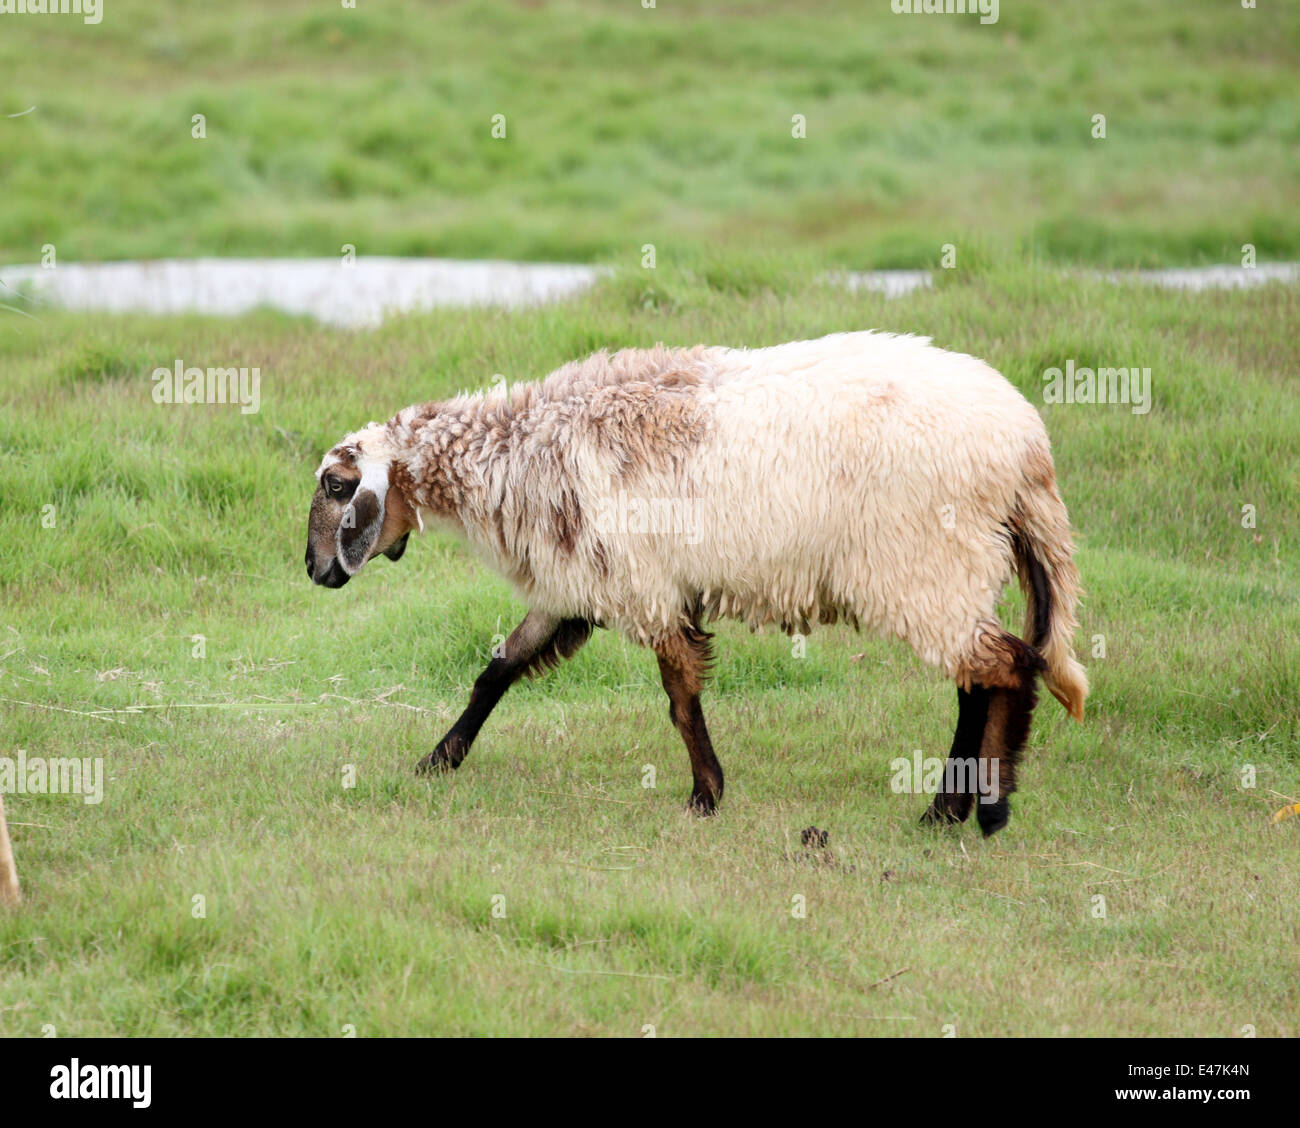 Sheep in the farm of Livestock. Stock Photo